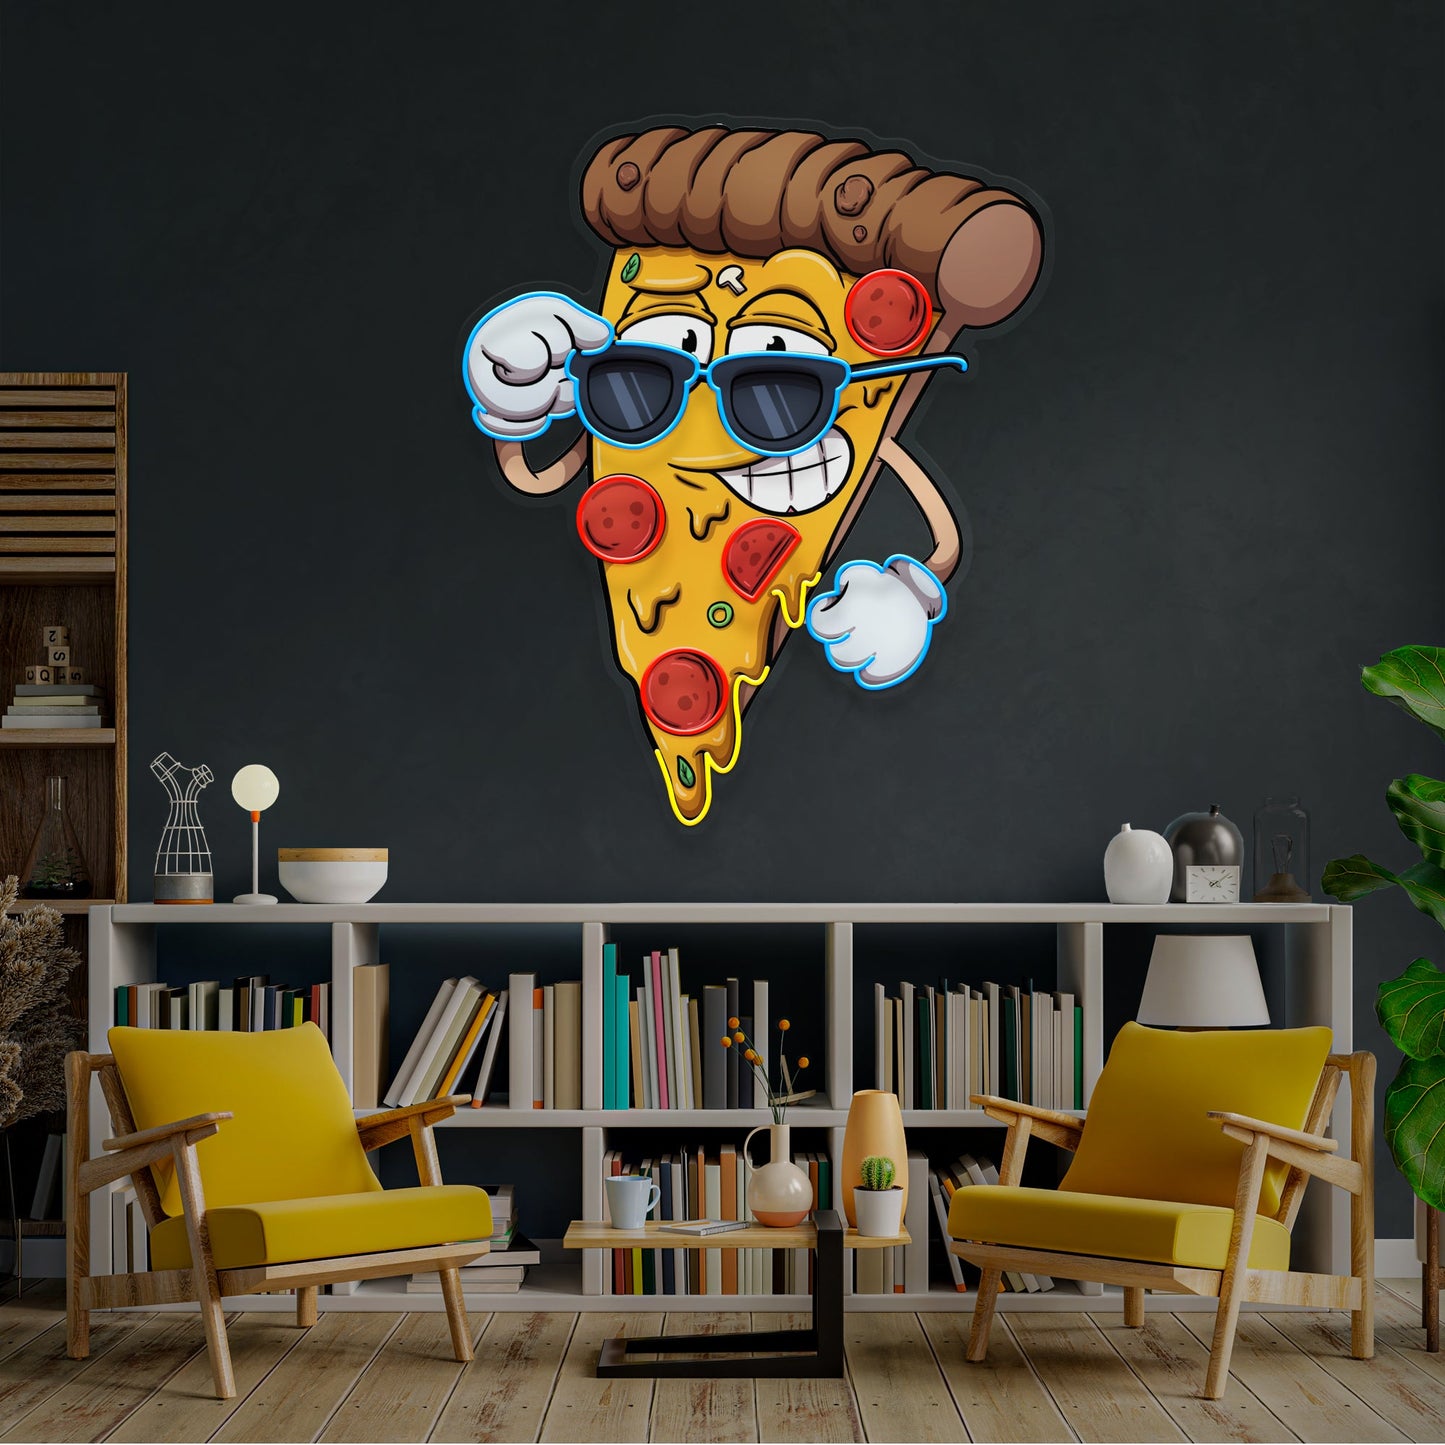 Cute Slice Of Cartoon Pizza Artwork Led Neon Sign Light - Neonzastudio